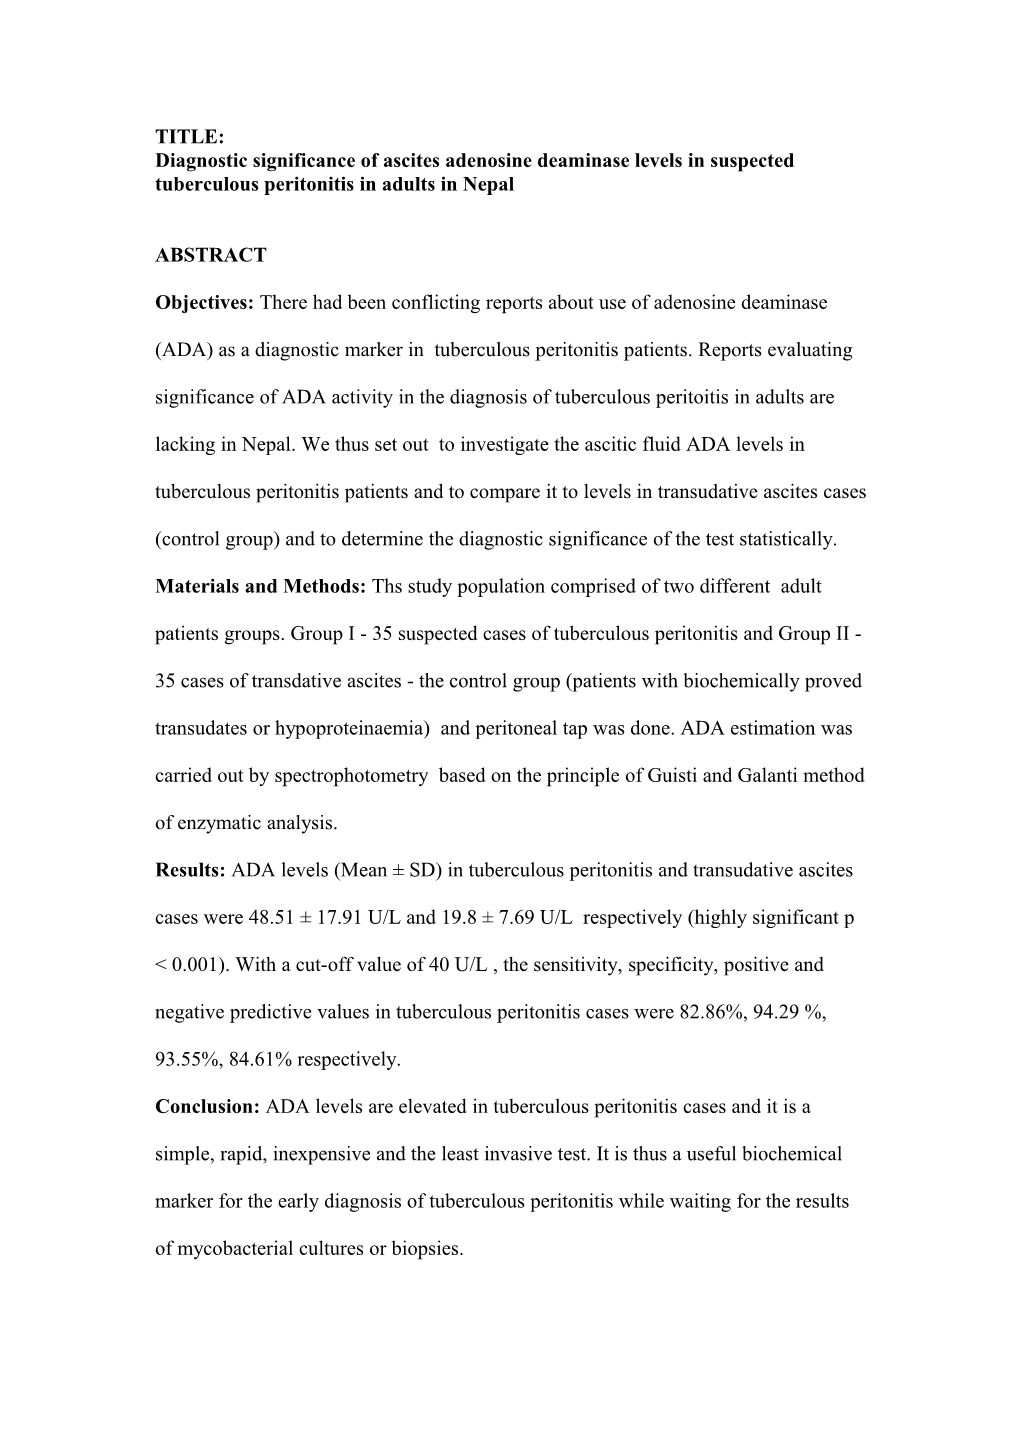 Diagnostic Significance of Ascites Adenosine Deaminase Levels in Suspected Tuberculous